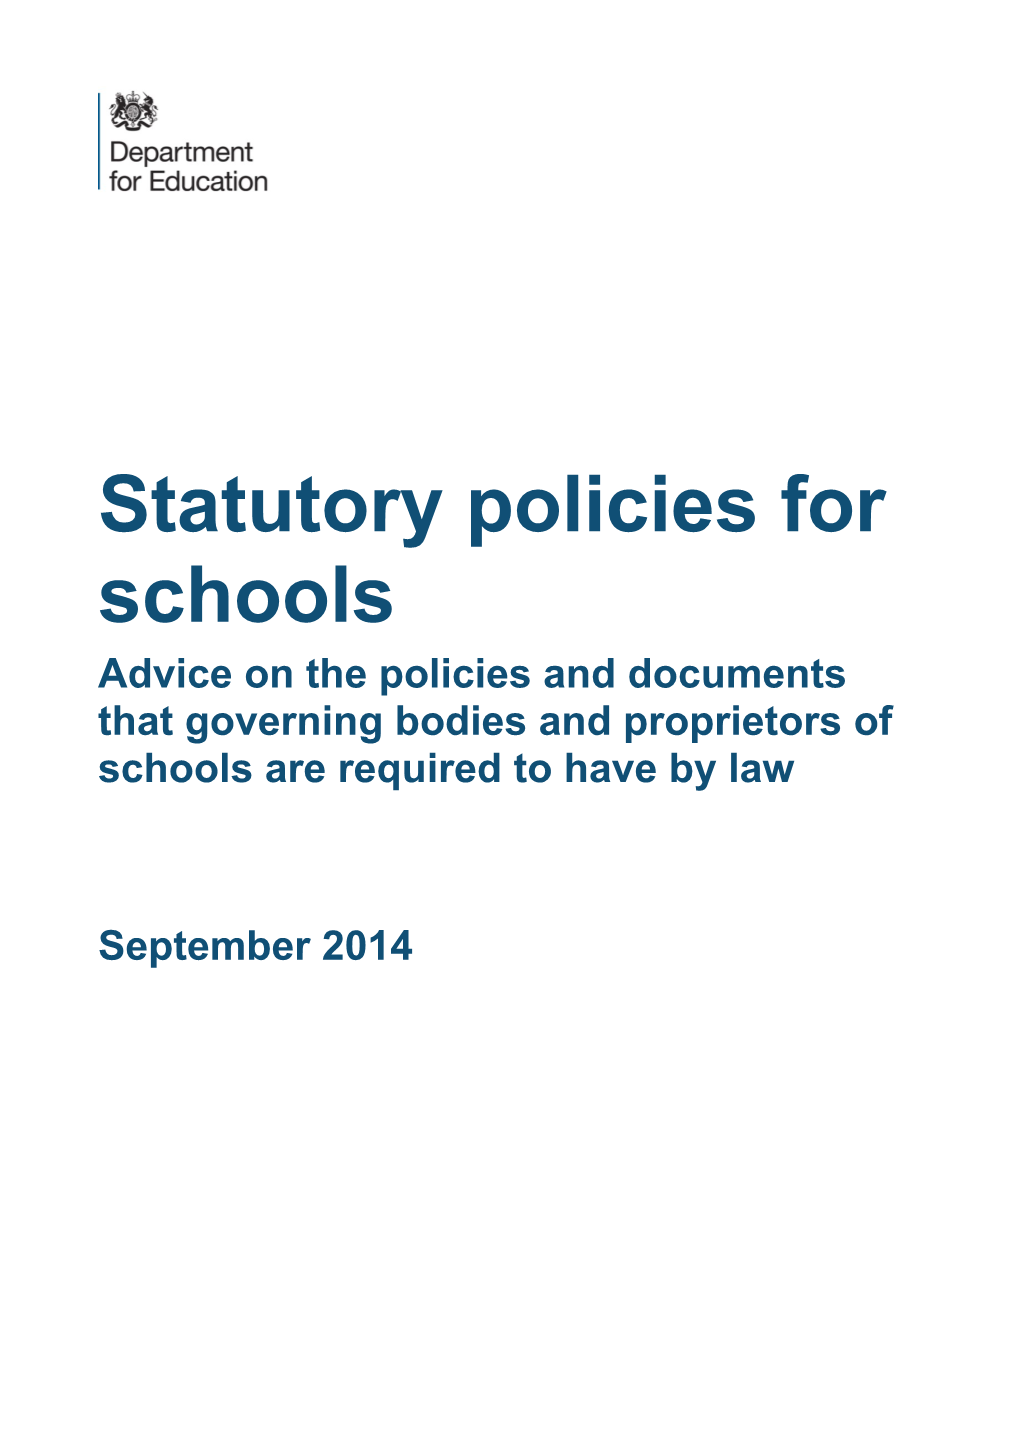 Statutory Policies for Schools